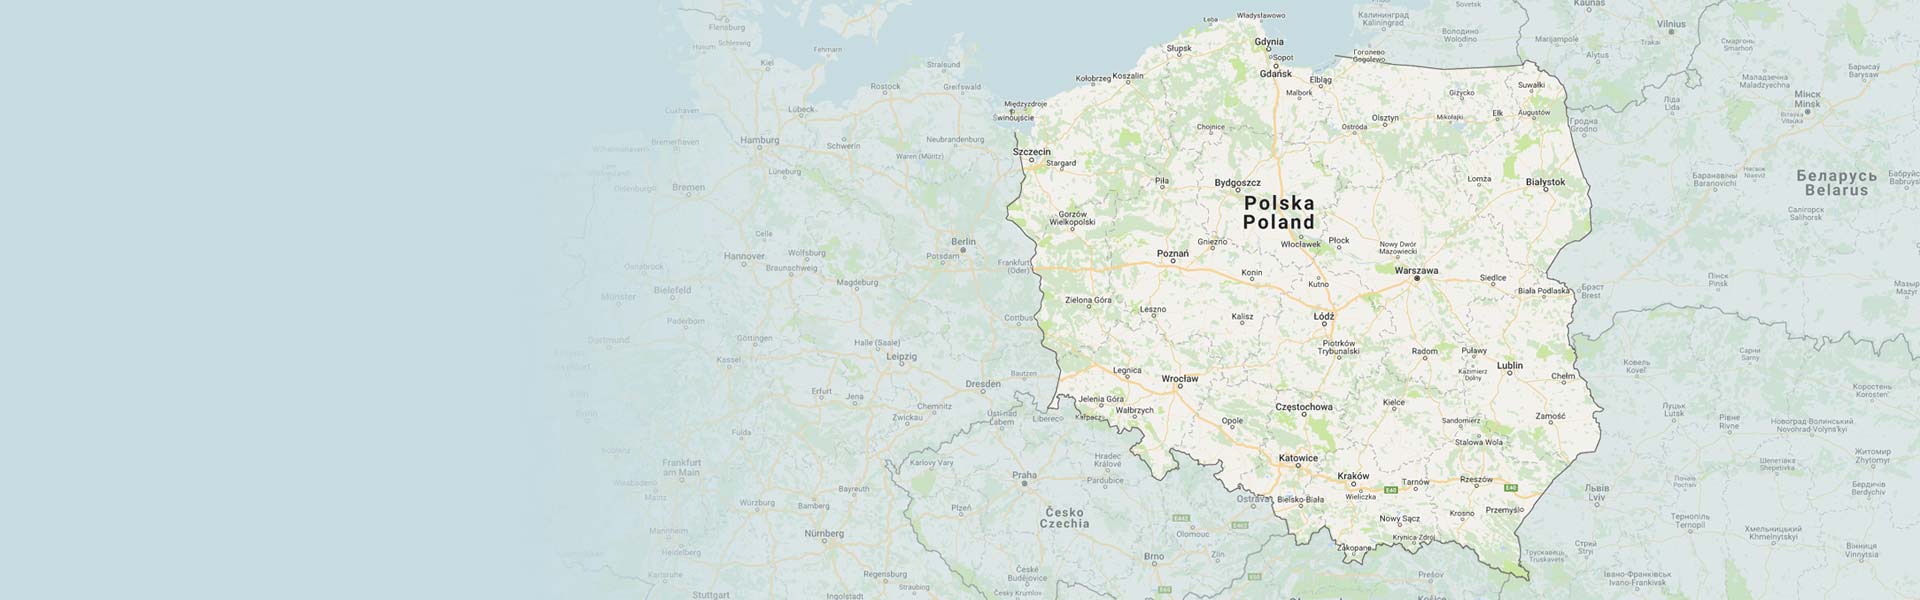 Mapa Europy z zaznaczonym terytorium Polski